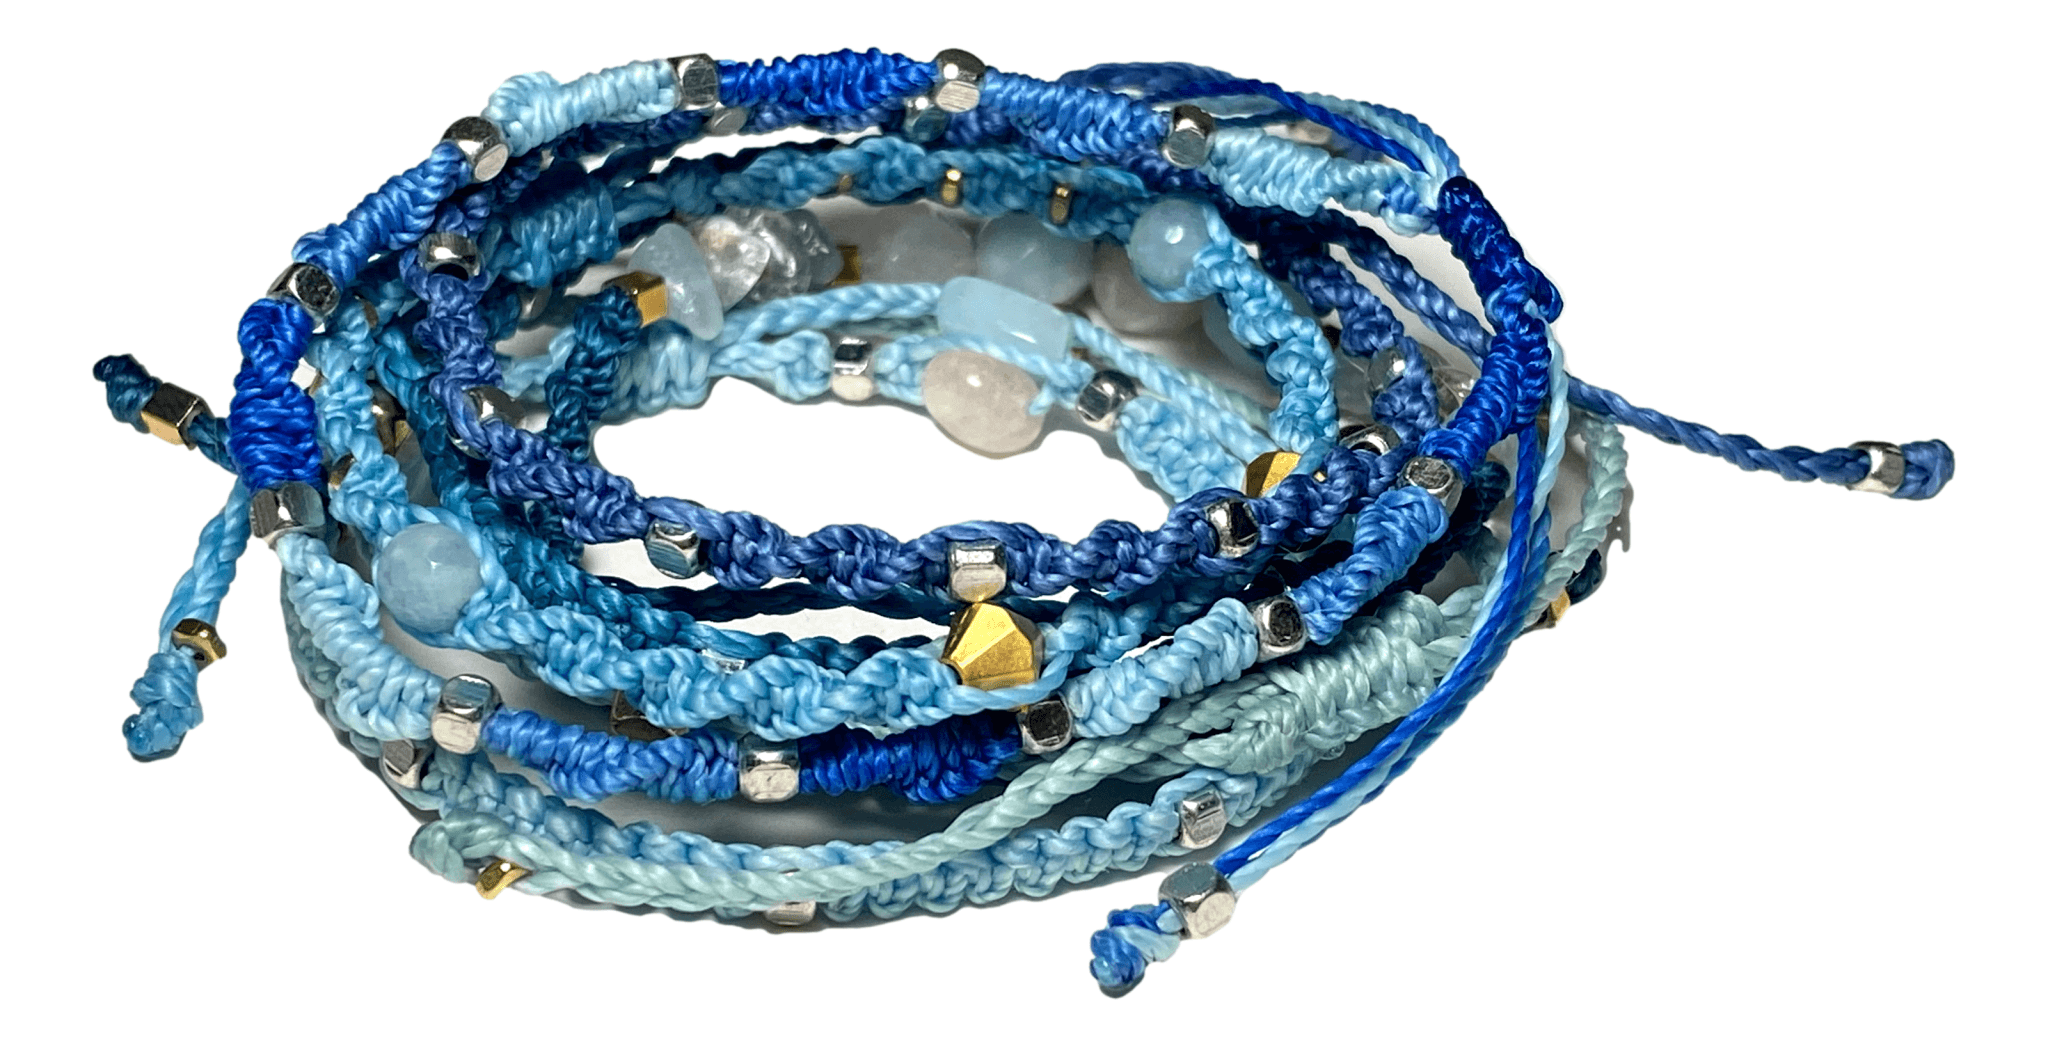 Bracelet Adjustable Assorted Blue Tones Nylon Thread Braidedtyles Handmade by Skilled Artisan - Ysleta Mission Gift Shop- VOTED El Paso's Best Gift Shop